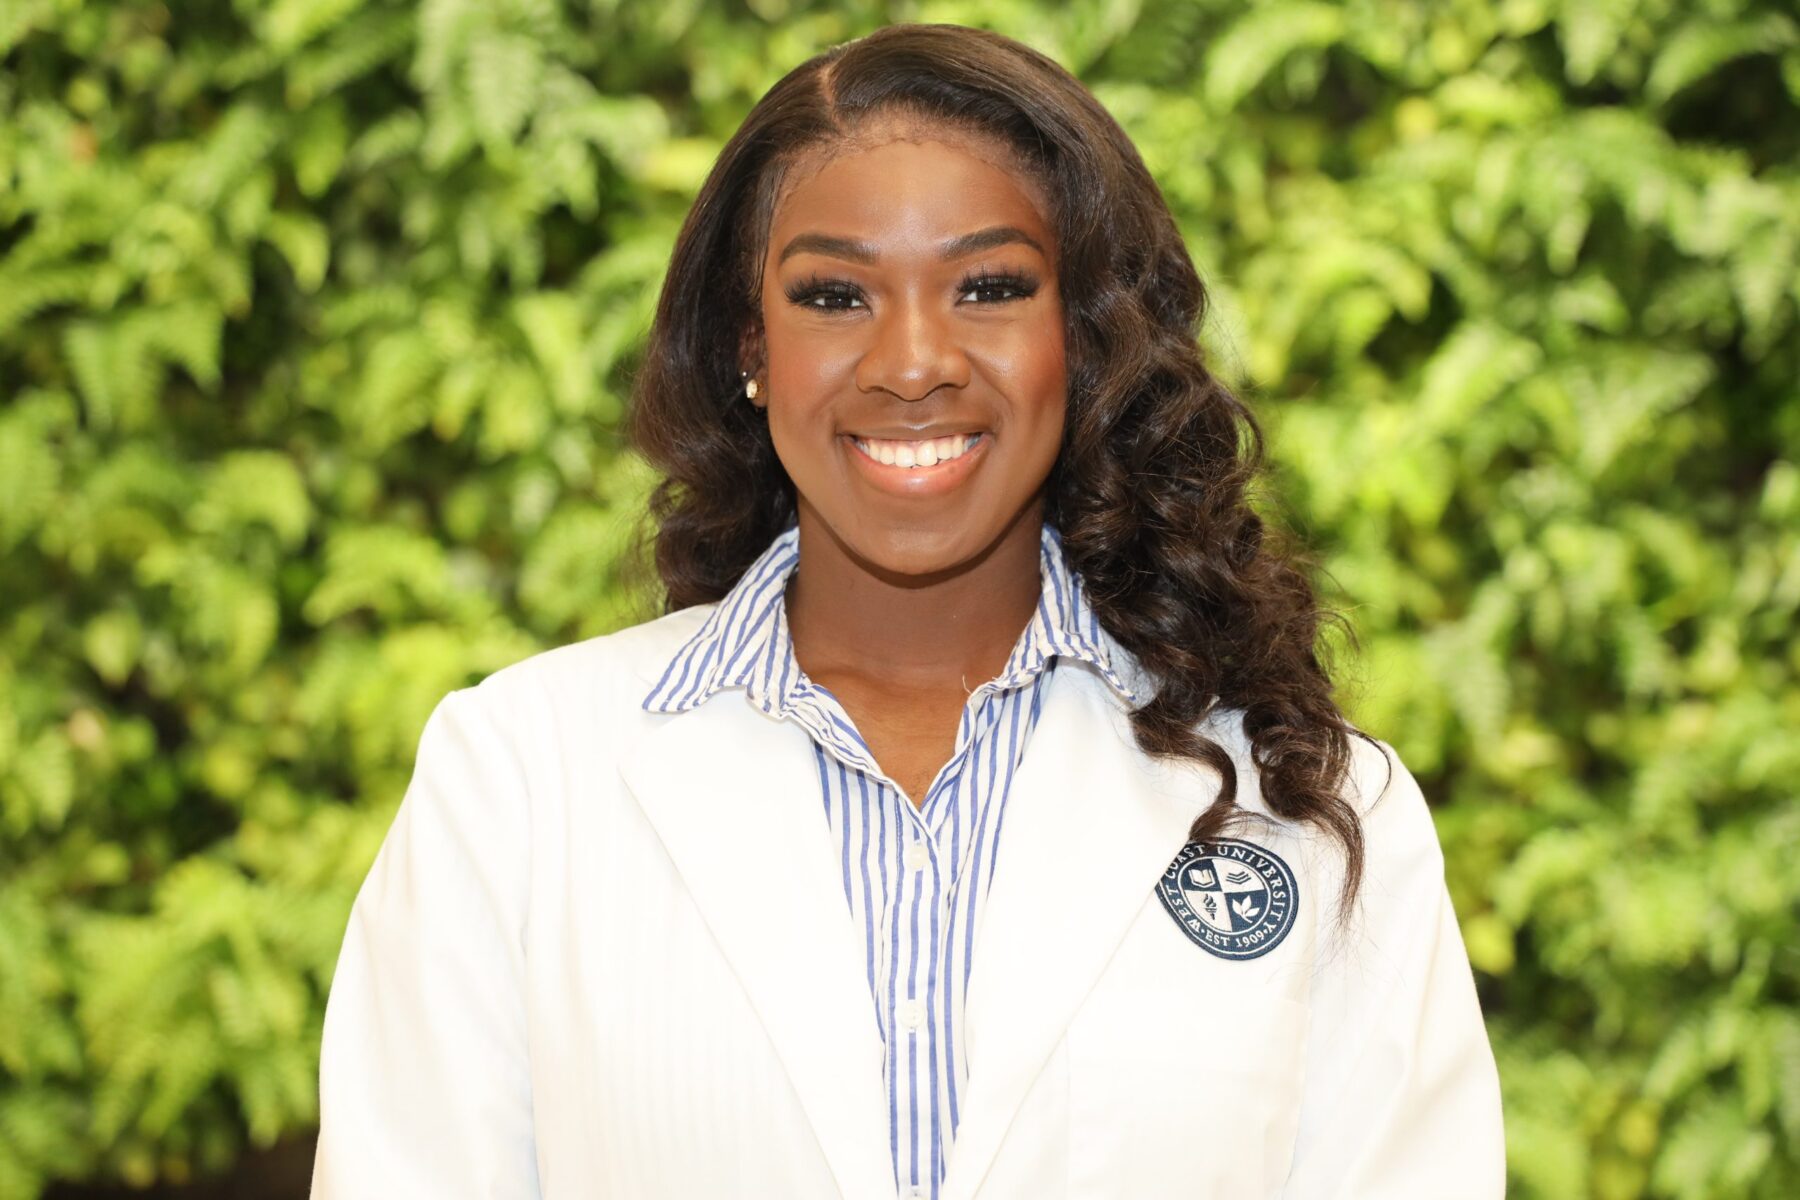 WCU physician assistant program student Cynthia O.